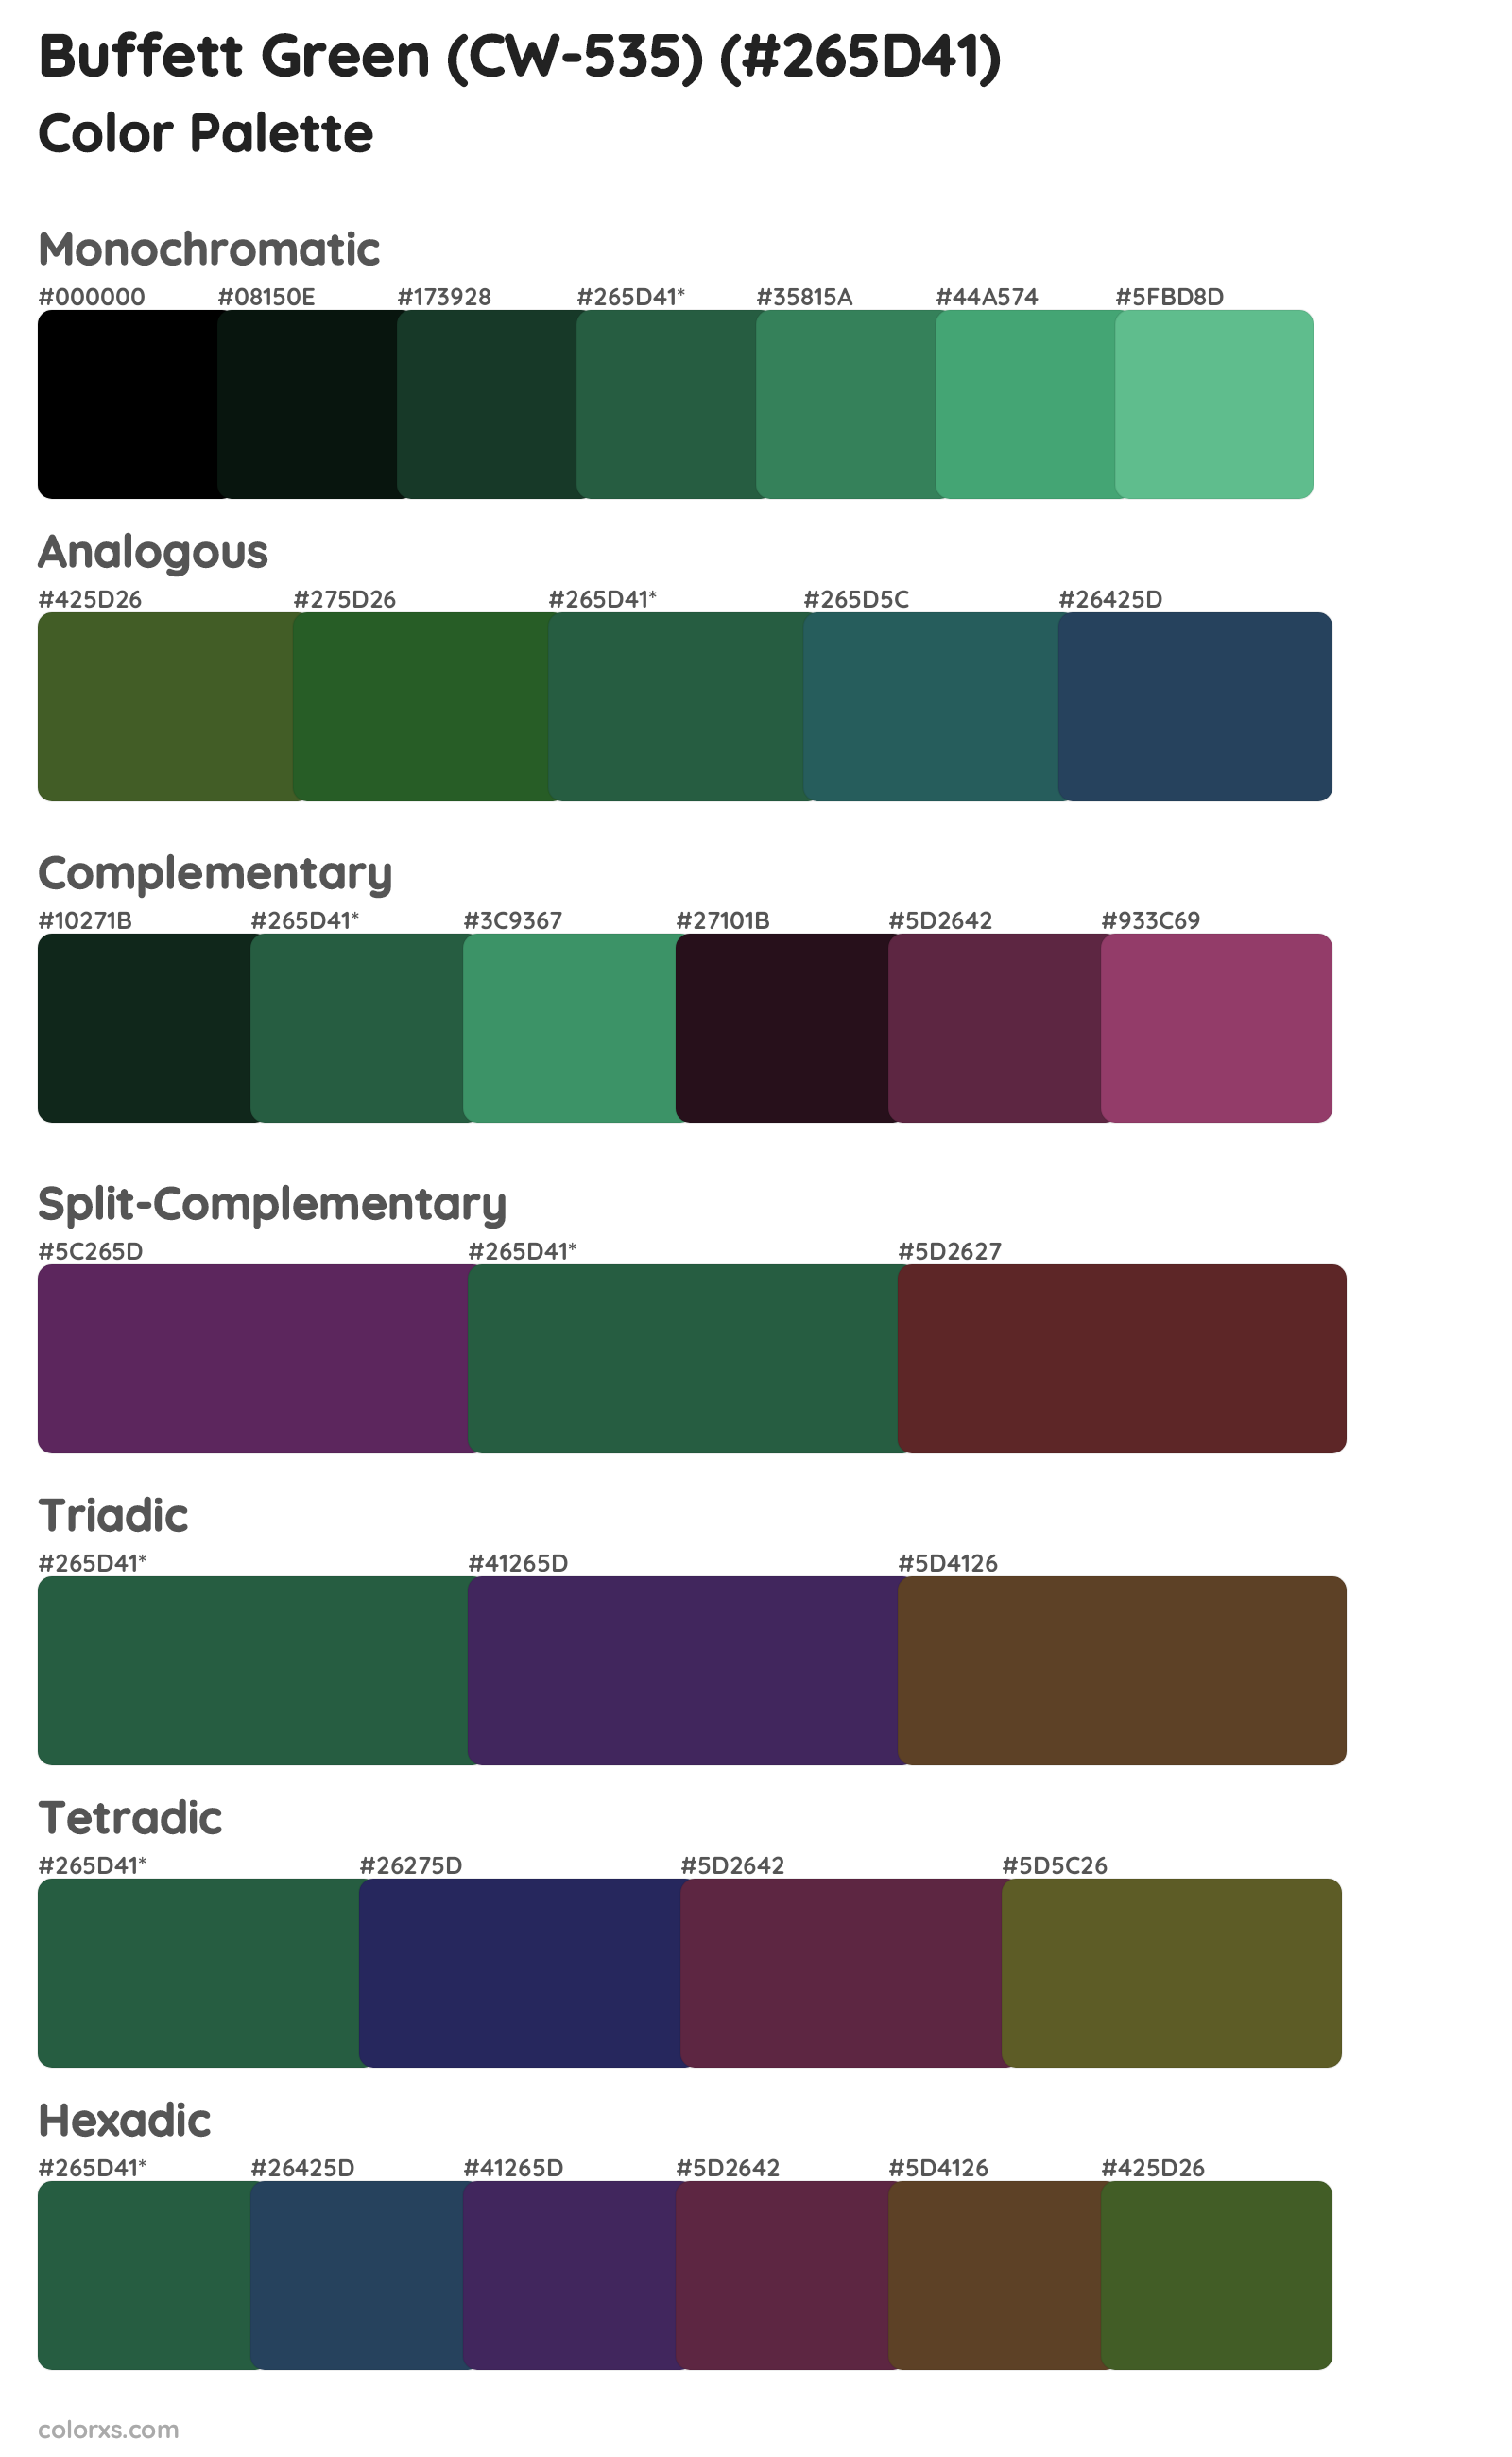 Buffett Green (CW-535) Color Scheme Palettes